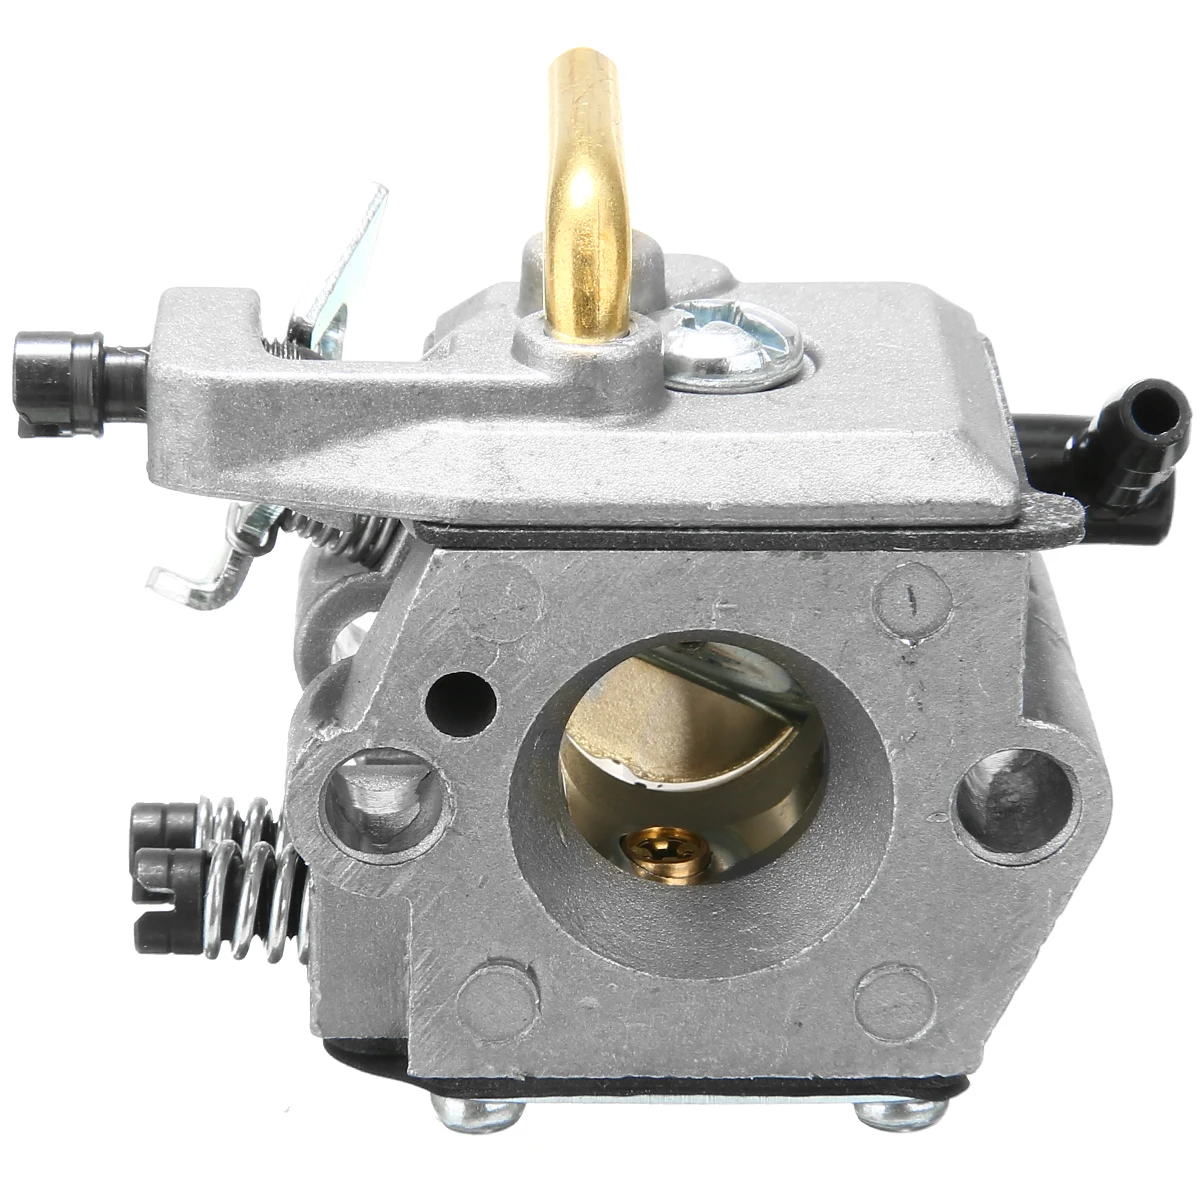 1pc Carburetor Carb Chain Saw Carburetor Repair Replacement Auto Engine Part Carbohydrate Compatible Accessories